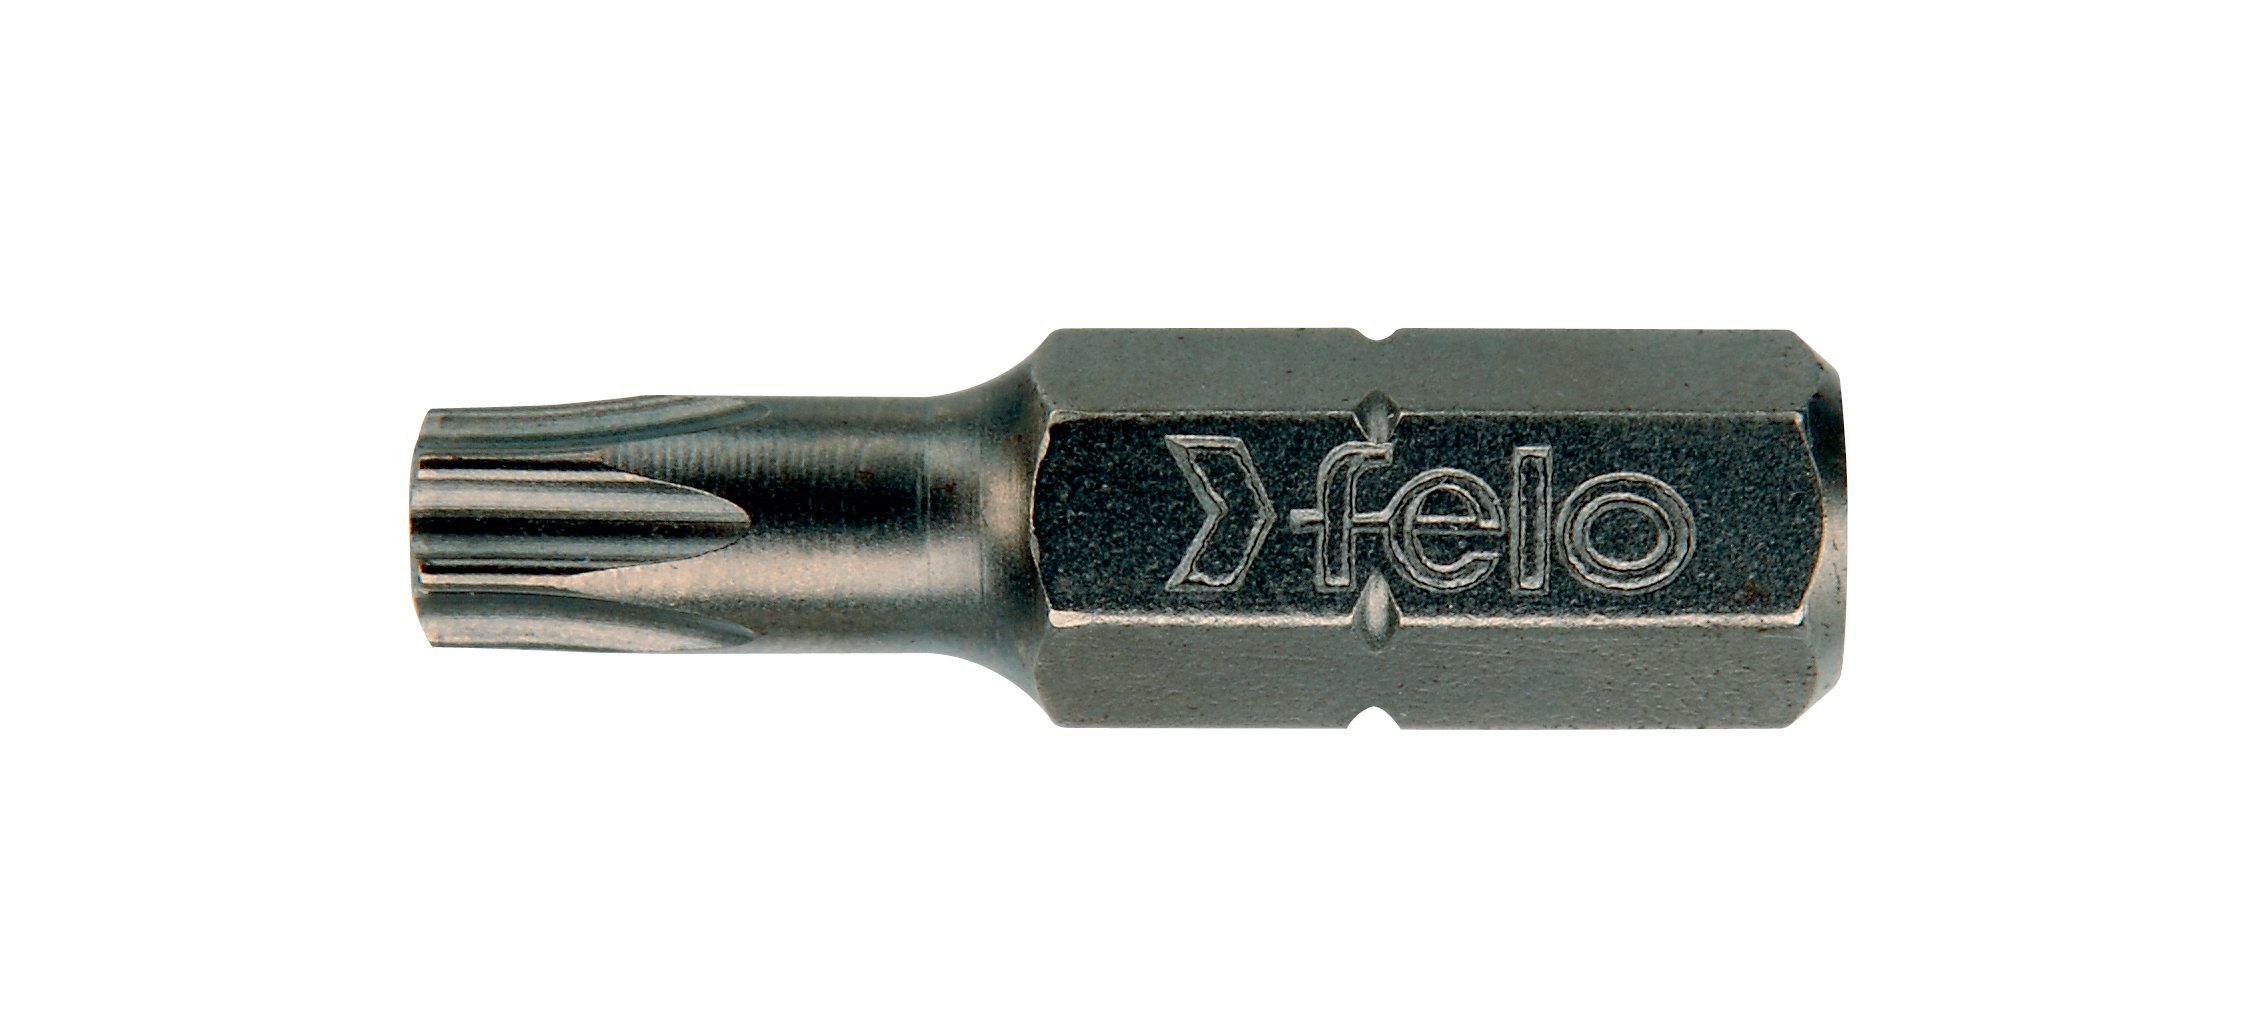 C Tx x 6,3 Stück) 27 (10 25mm Torx-Bit Felo Bit, Felo Industrie